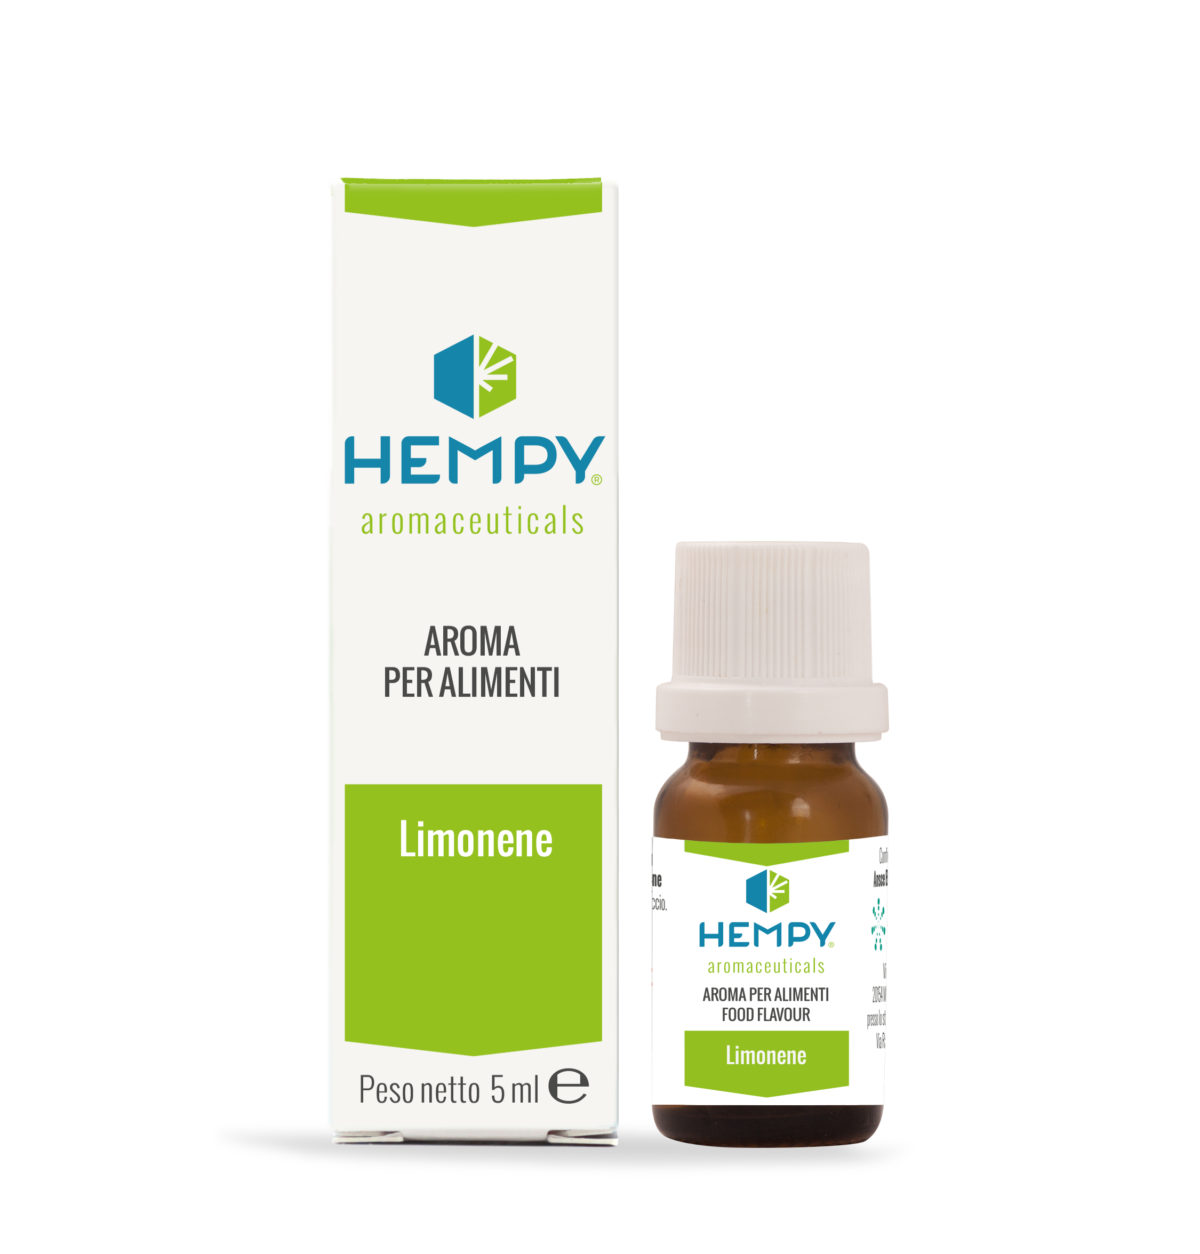 Hempy Limonene rimedio naturale reflusso gastroesofageo